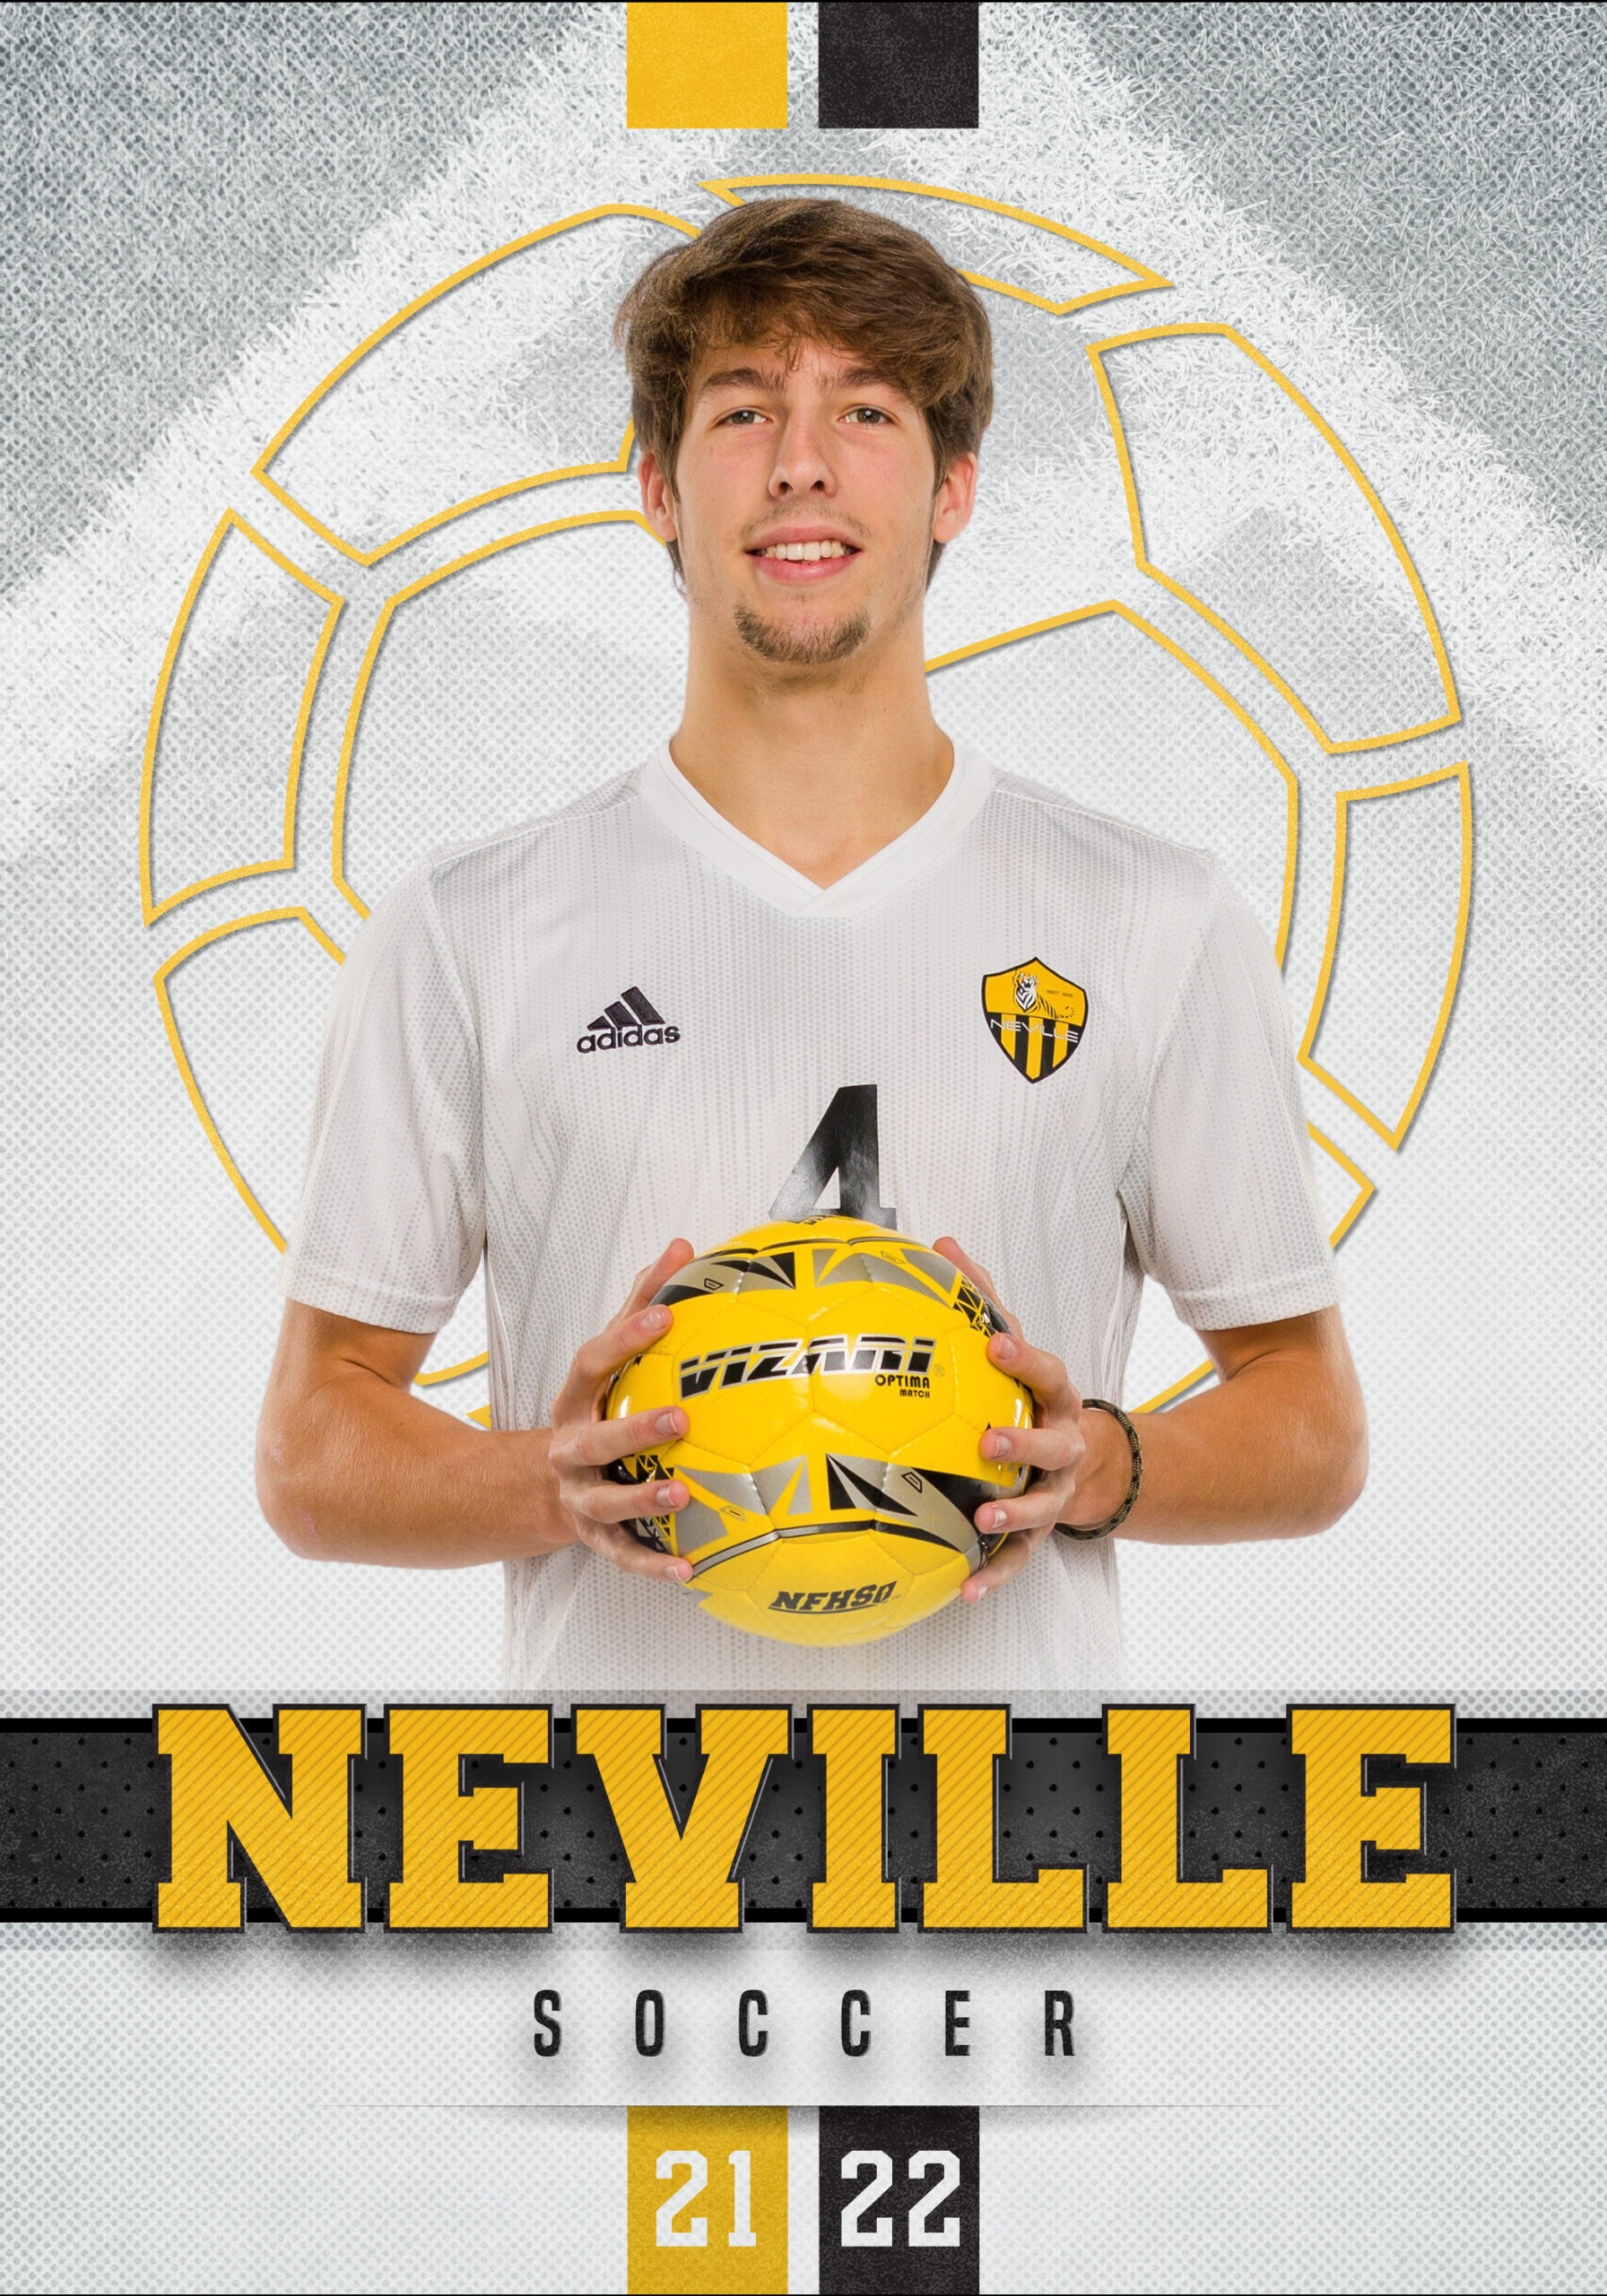 Neville High School Boys Soccer | SnapMe Creative